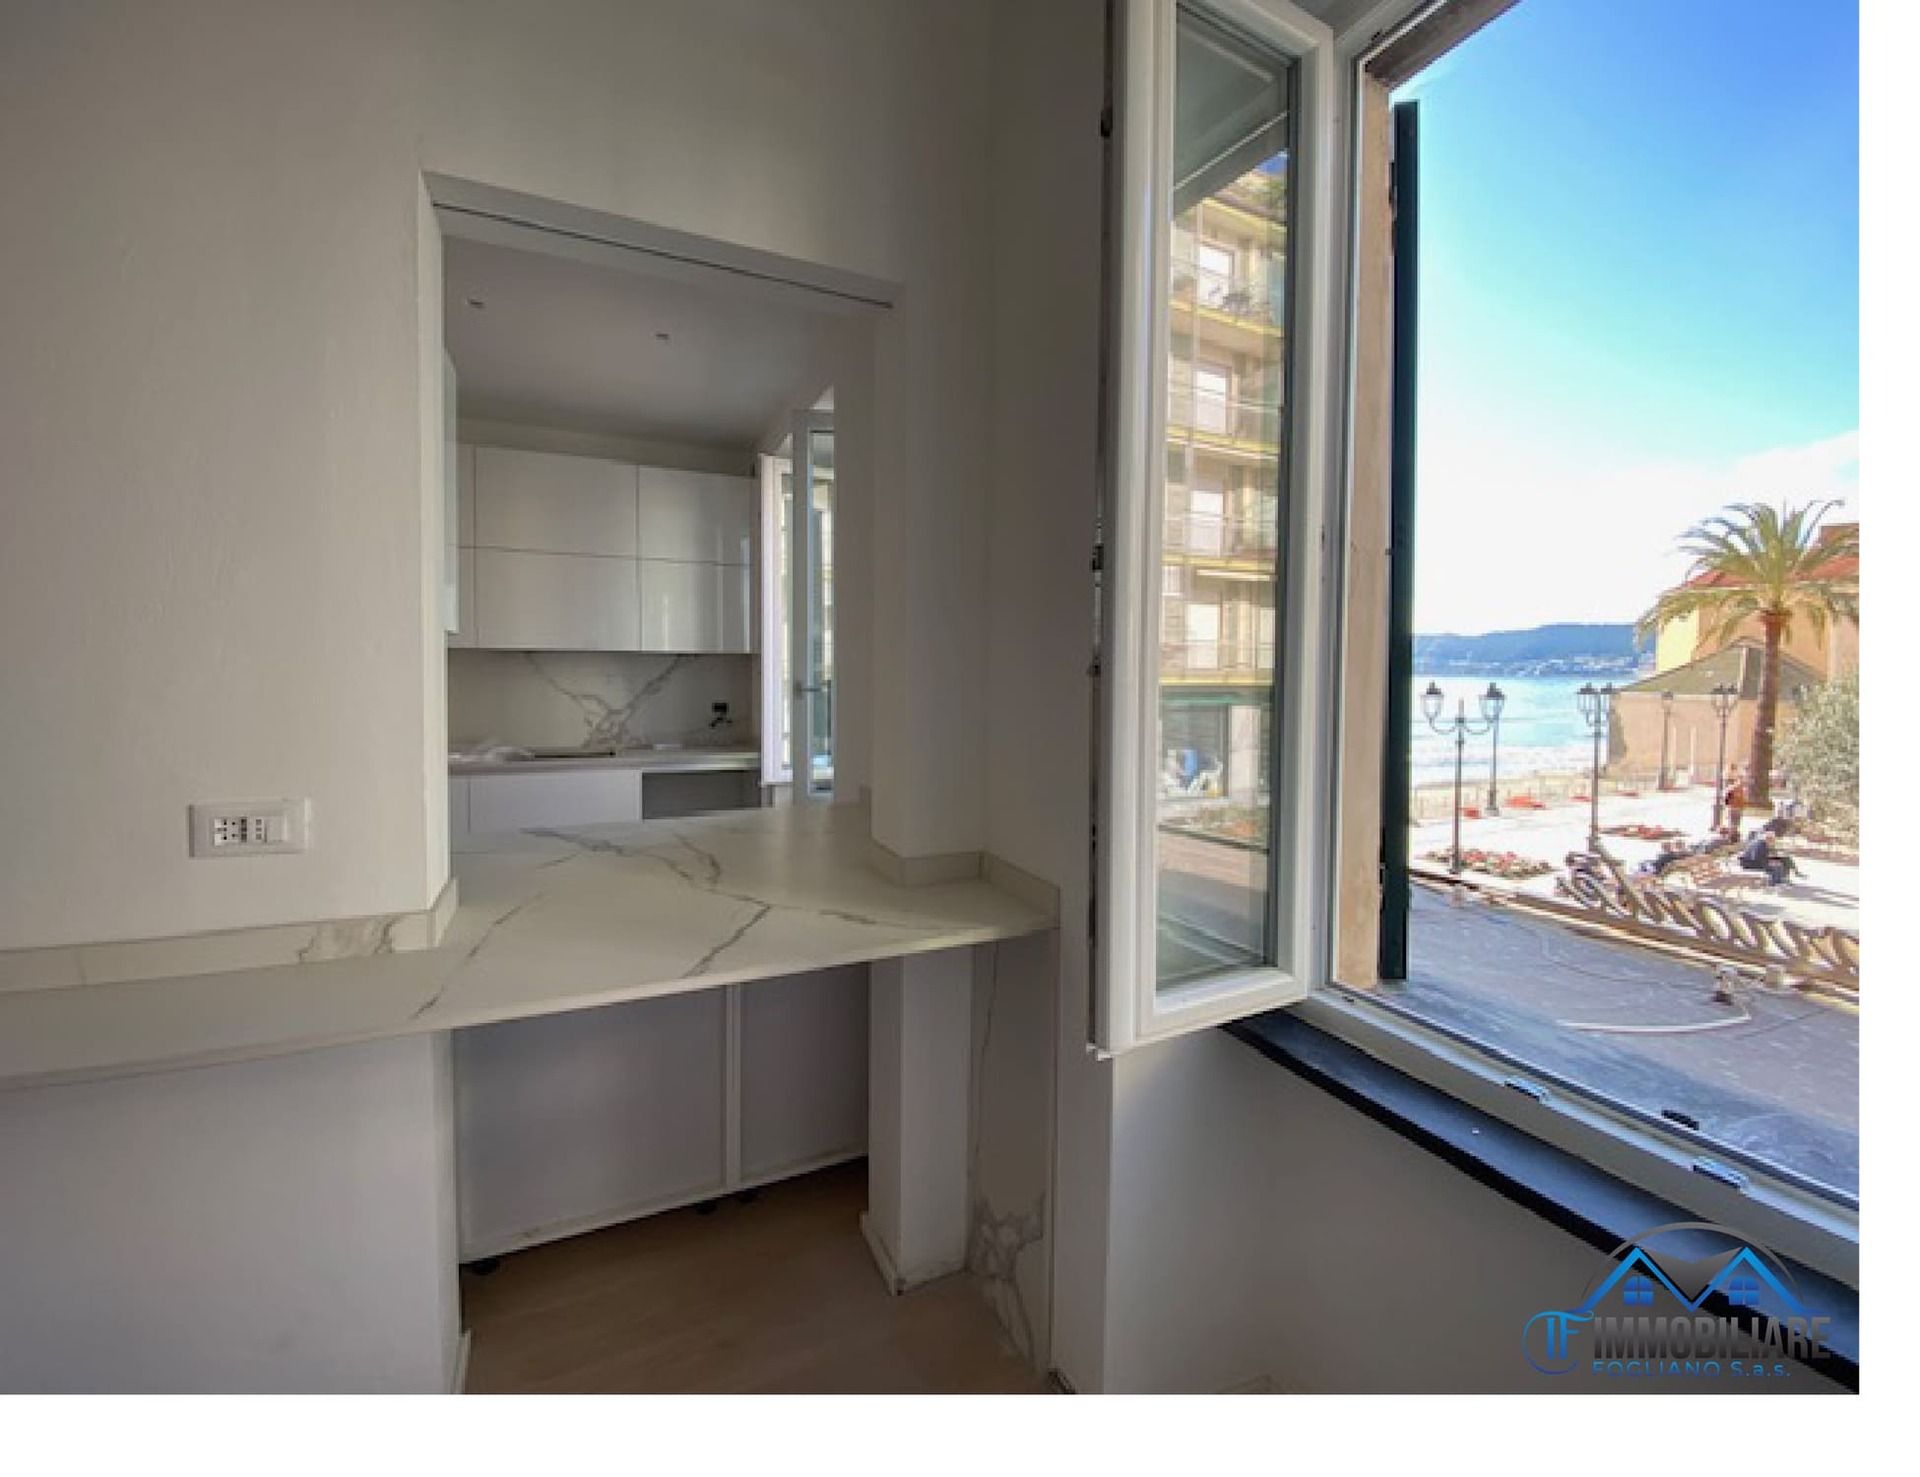 For sale apartment in  Alassio Liguria